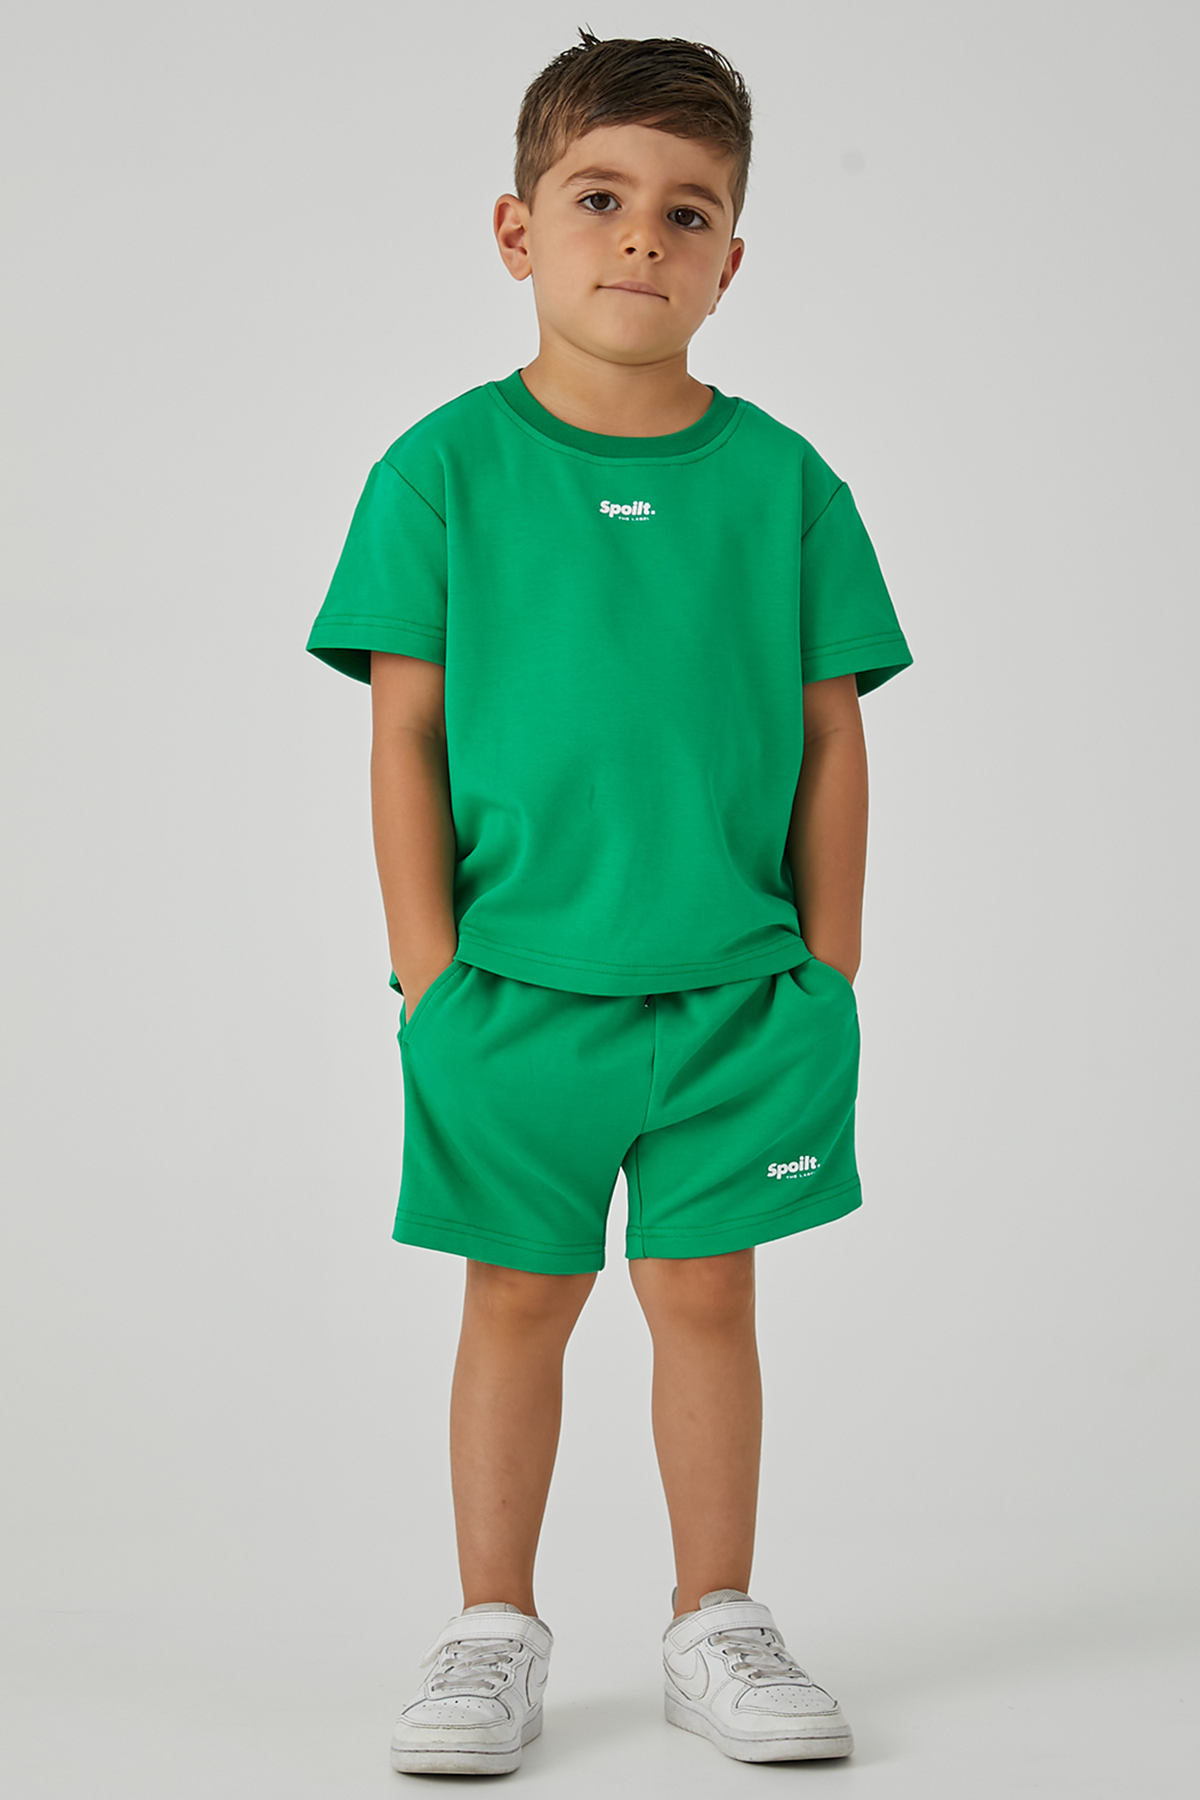 Charlee Short Sleeve T Shirt - Green